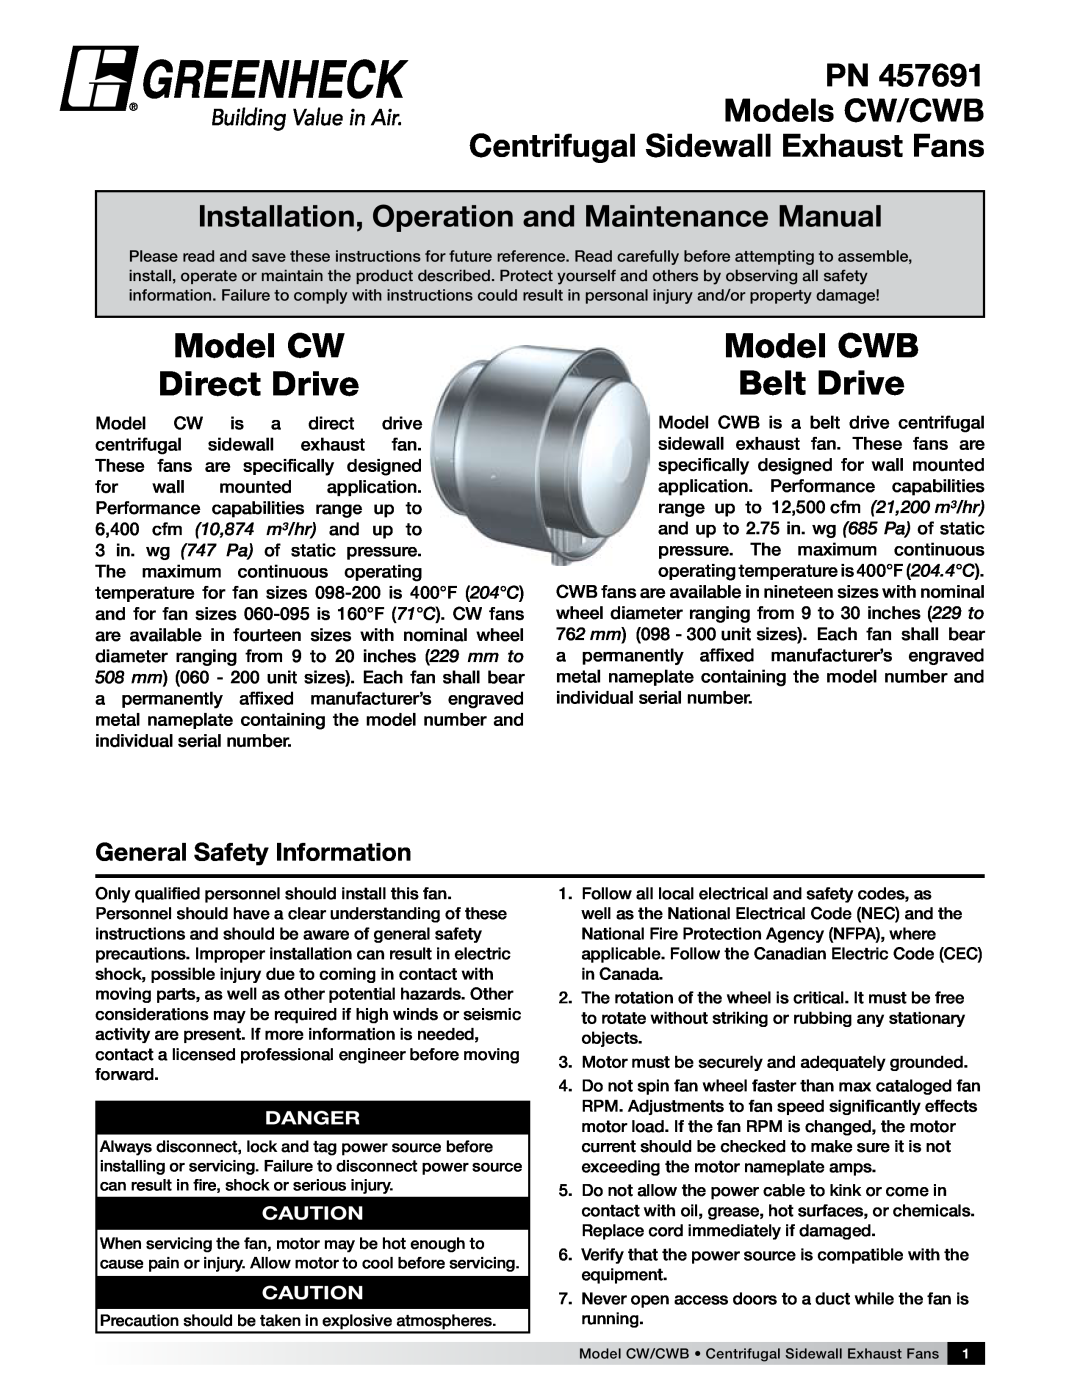 Greenheck Fan CW/CWB manual General Safety Information, Model CW Direct Drive, Model CWB Belt Drive, Danger 